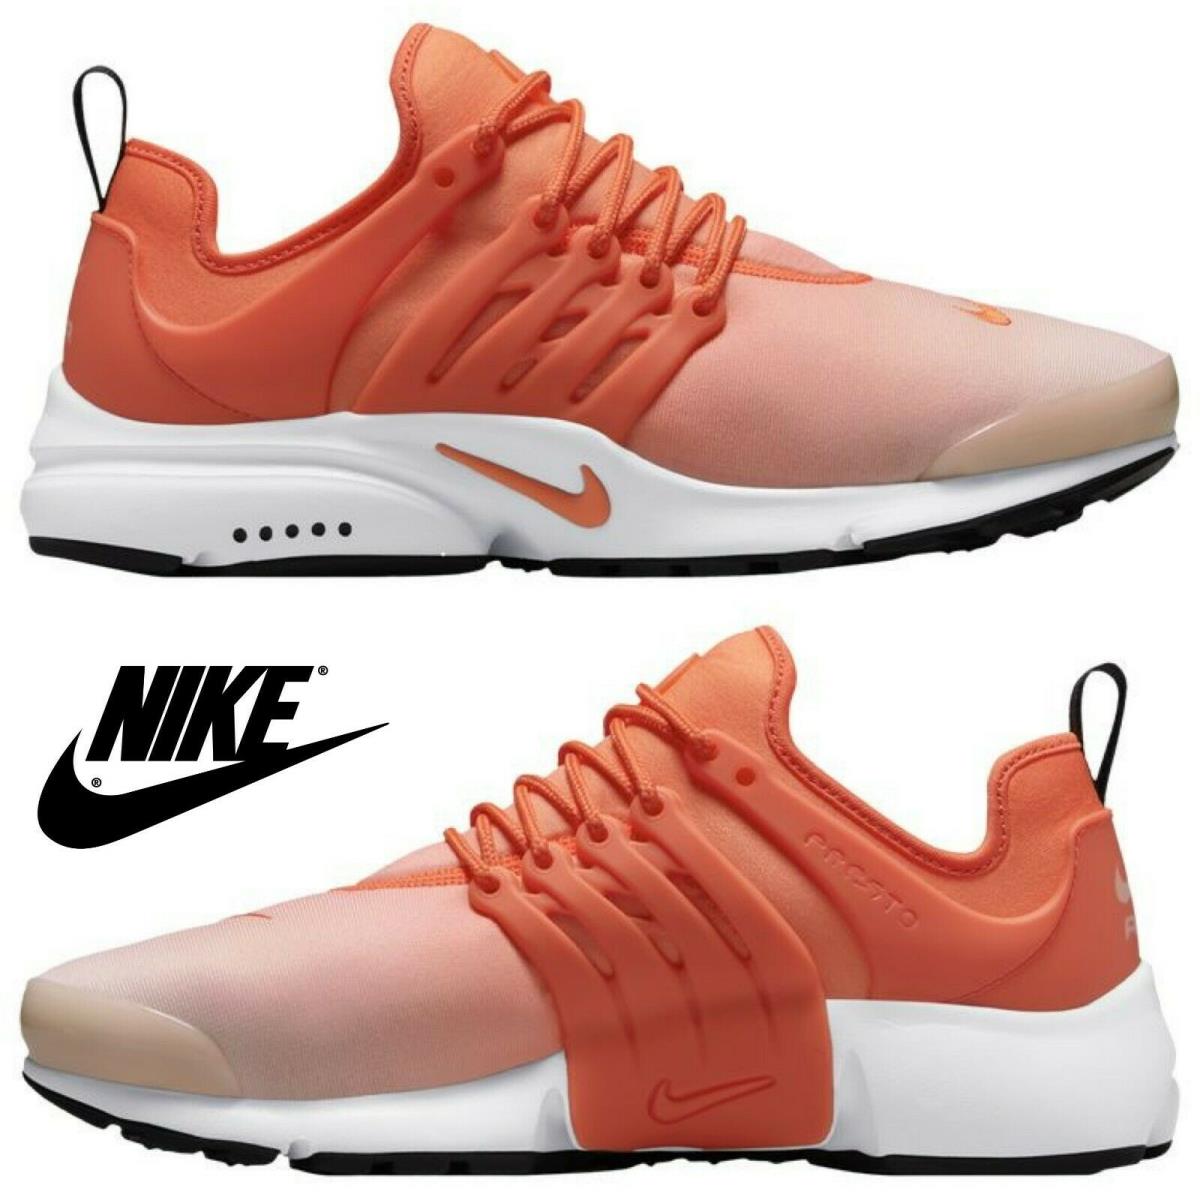 Nike Air Presto Women s Sneakers Casual Shoes Premium Running Sport Gym Orange - Orange , Orange/Red/White Manufacturer